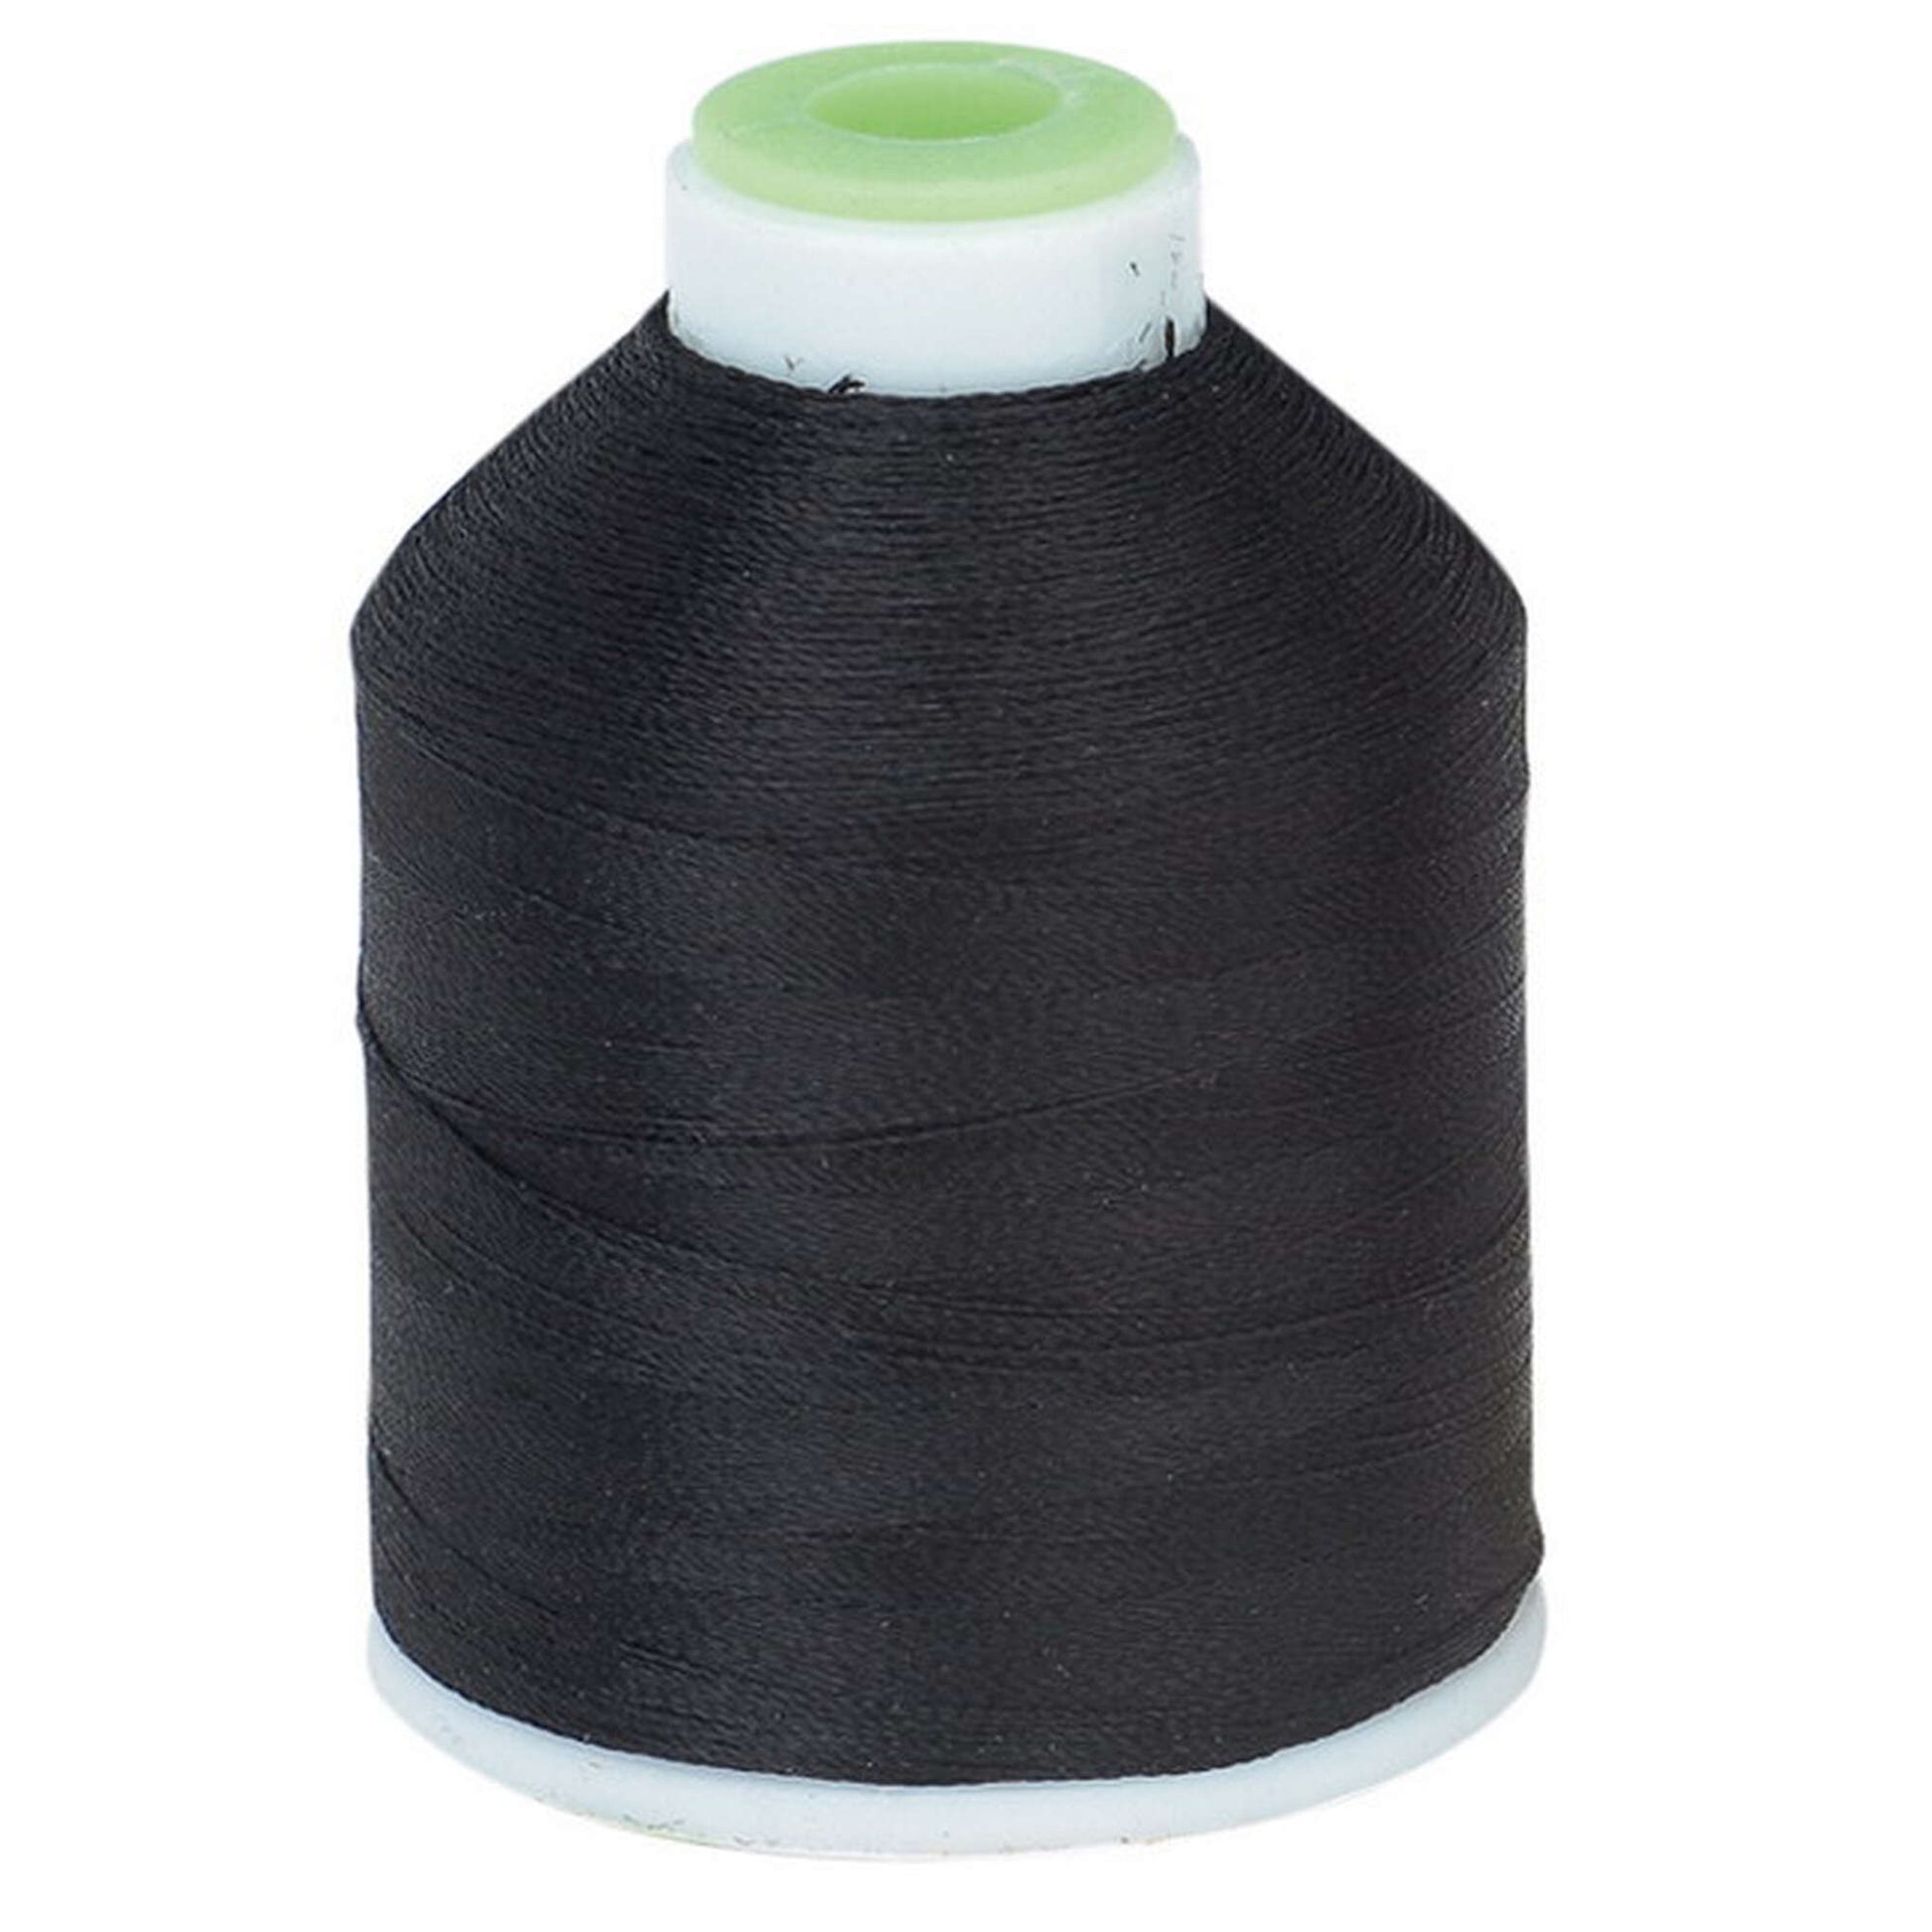 Coats & Clark Machine Embroidery Thread (1100 Yards) Black